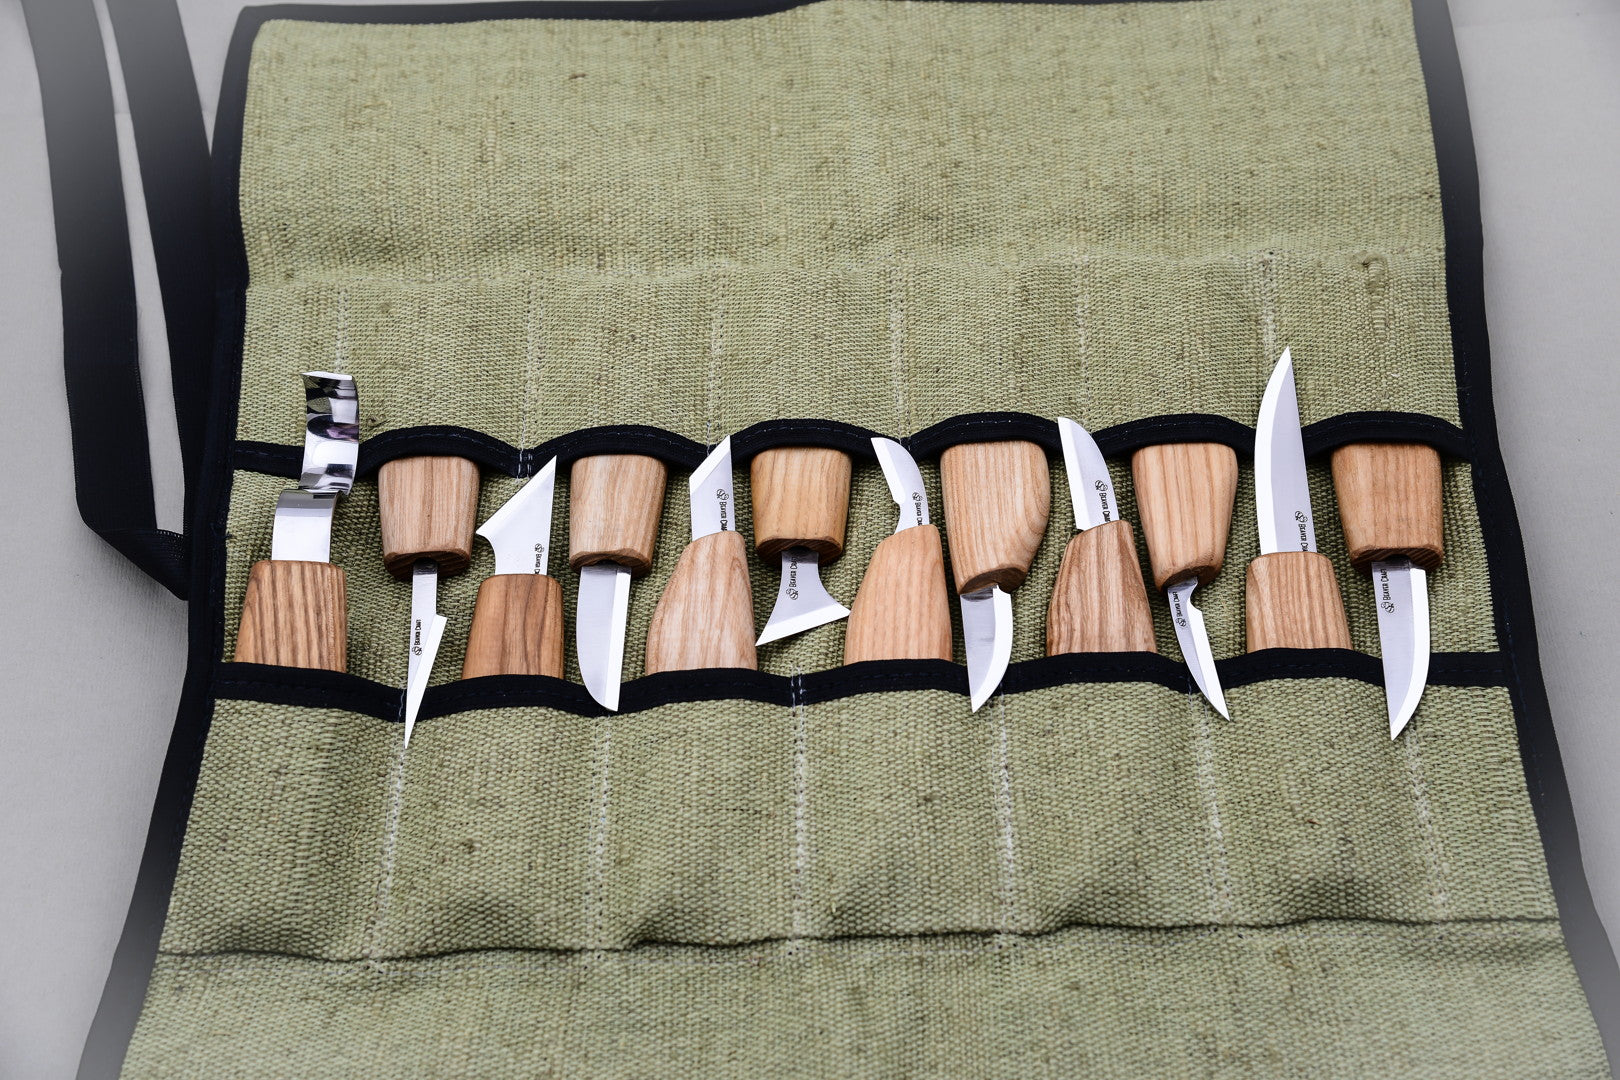 Buy replacement blades carving knife online - BeaverCraft – BeaverCraft  Tools